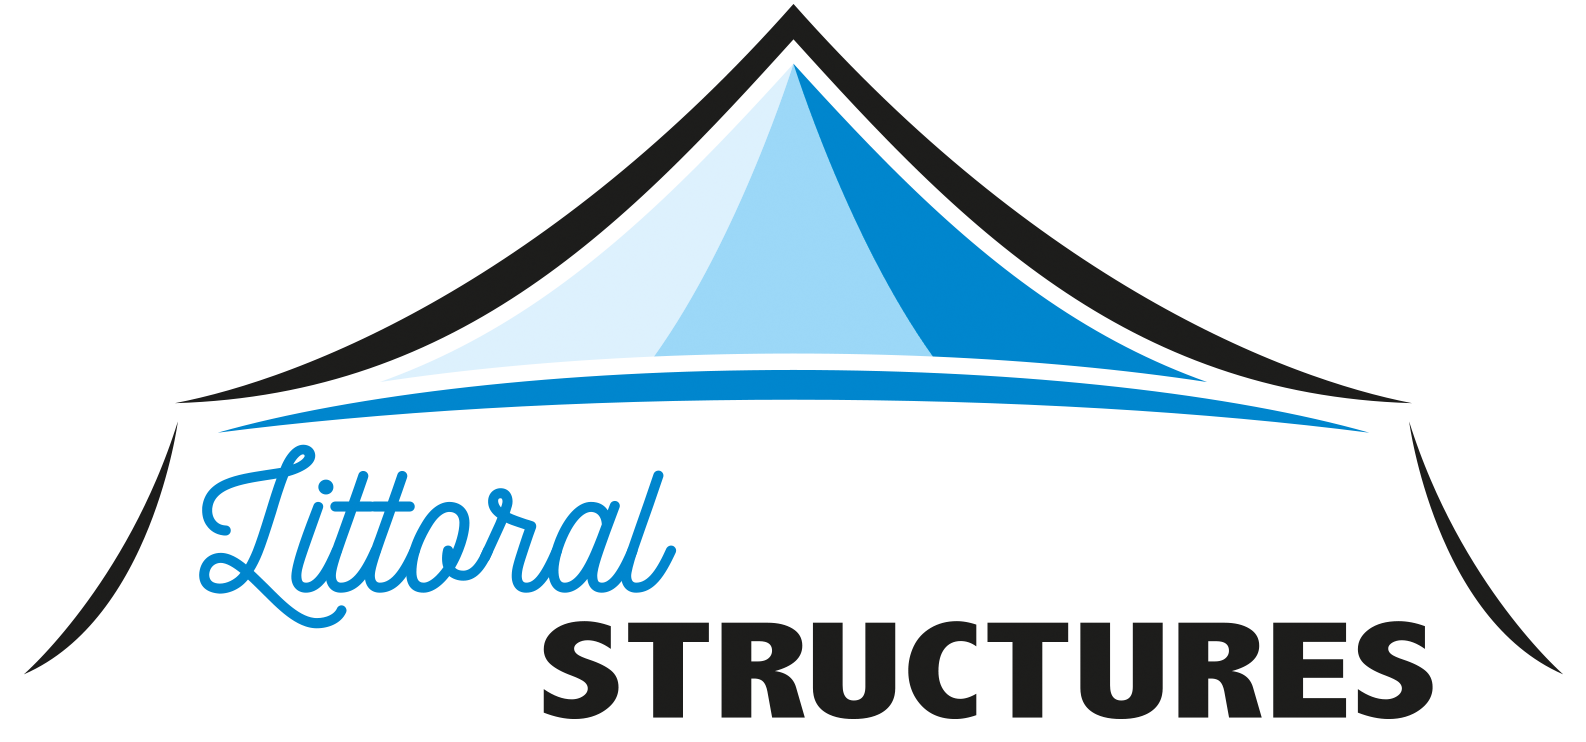 Littoral Structures